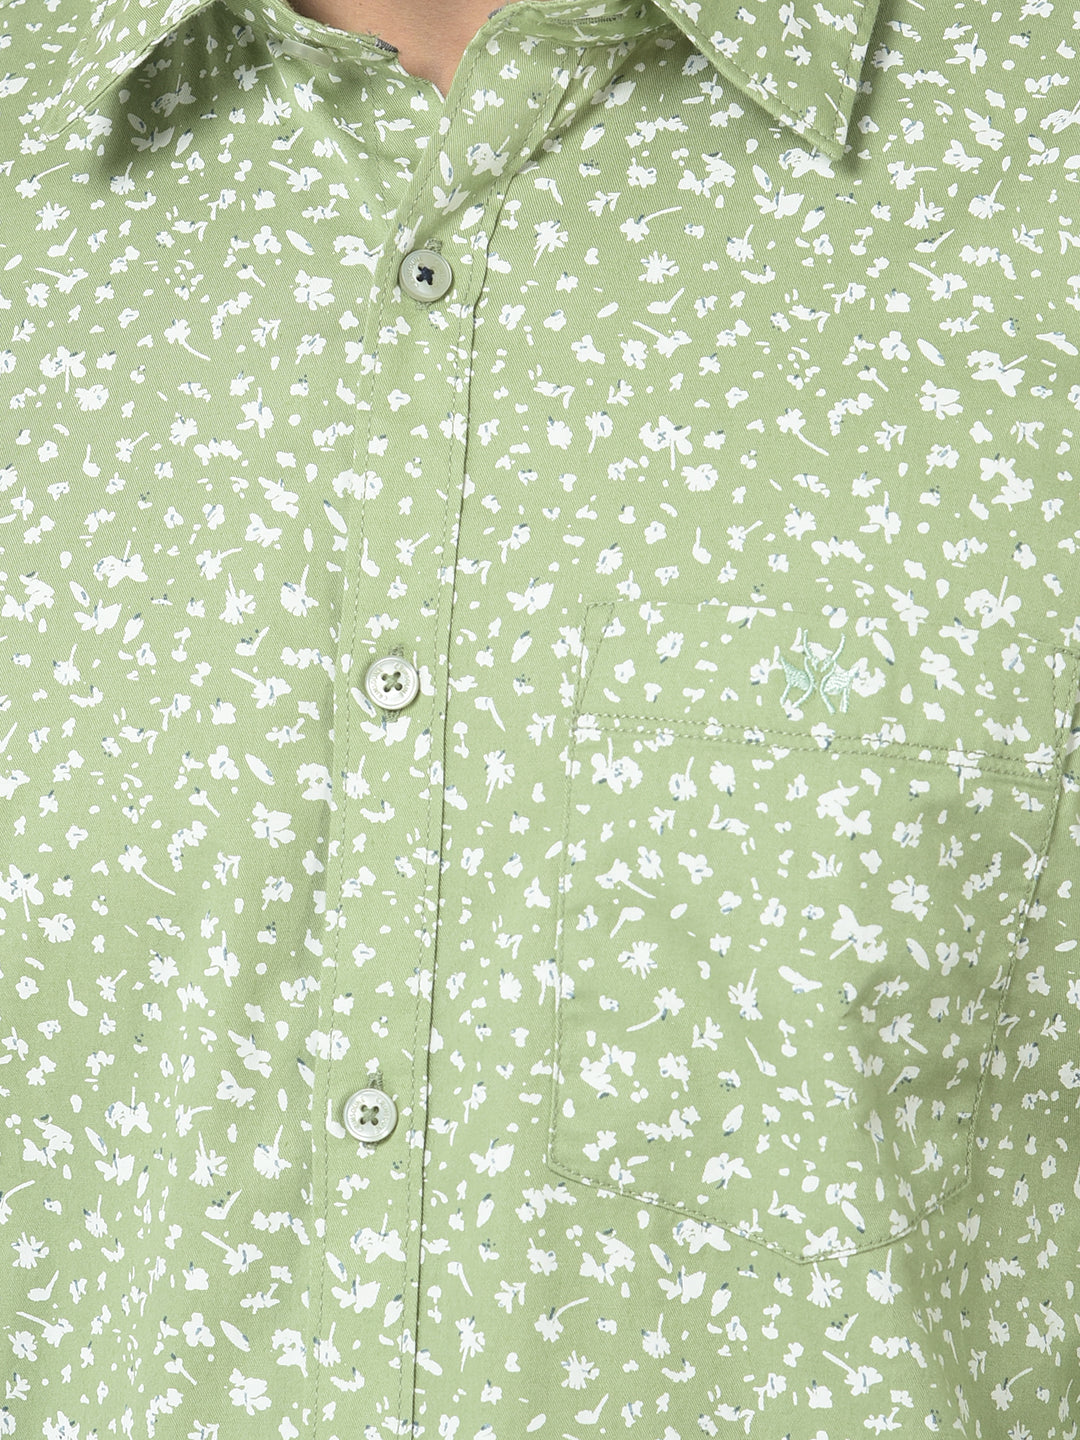 Light Green Shirt in Floral Print 